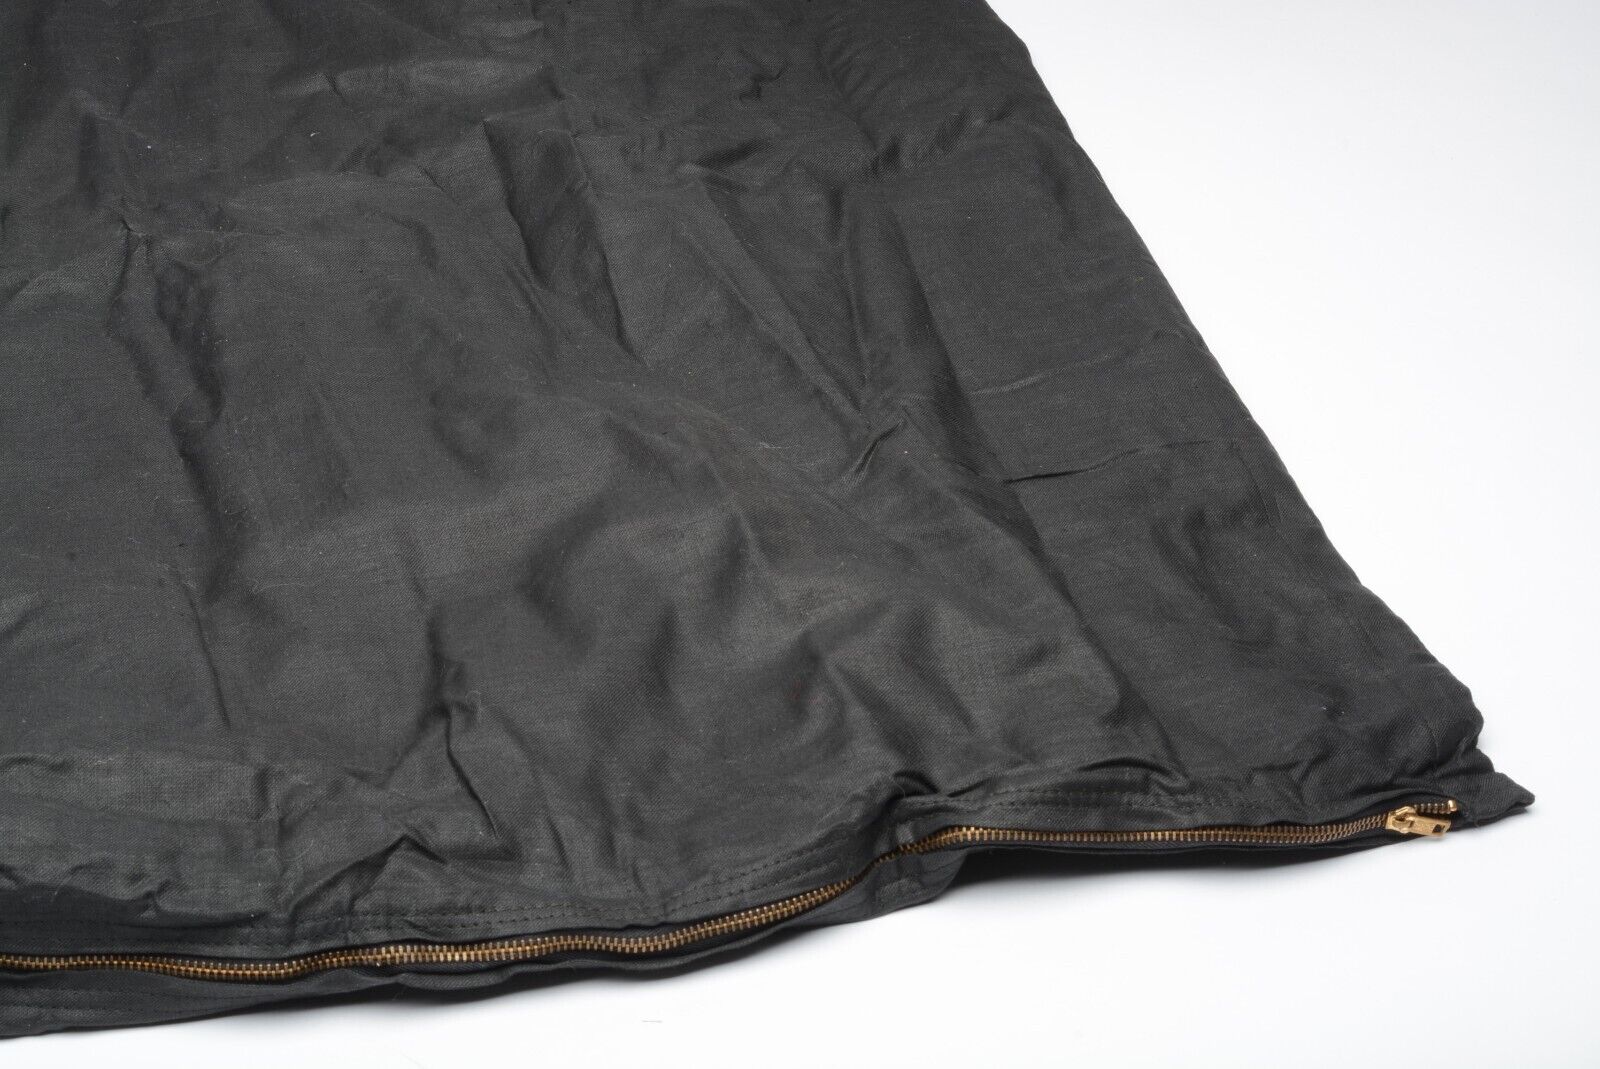 Film Changing Developing Darkroom Bag Light-proof Dual Layer W/Zipper  AntiStatic | eBay